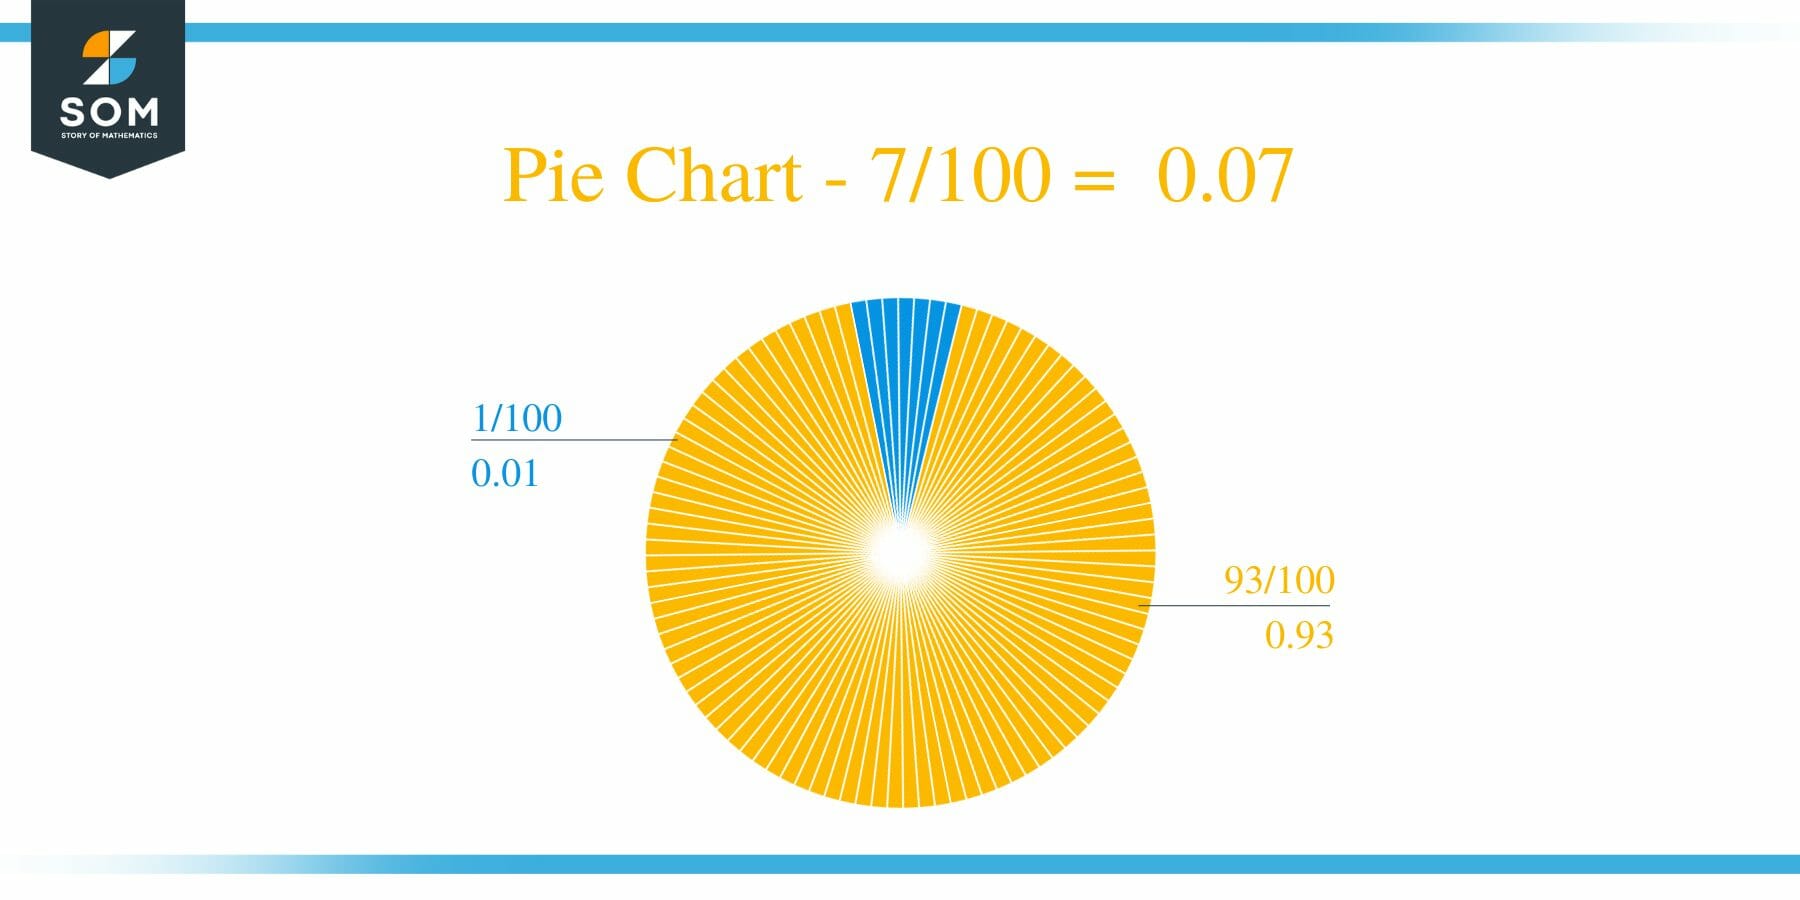 Pie Chart 7/100 Long Division Method